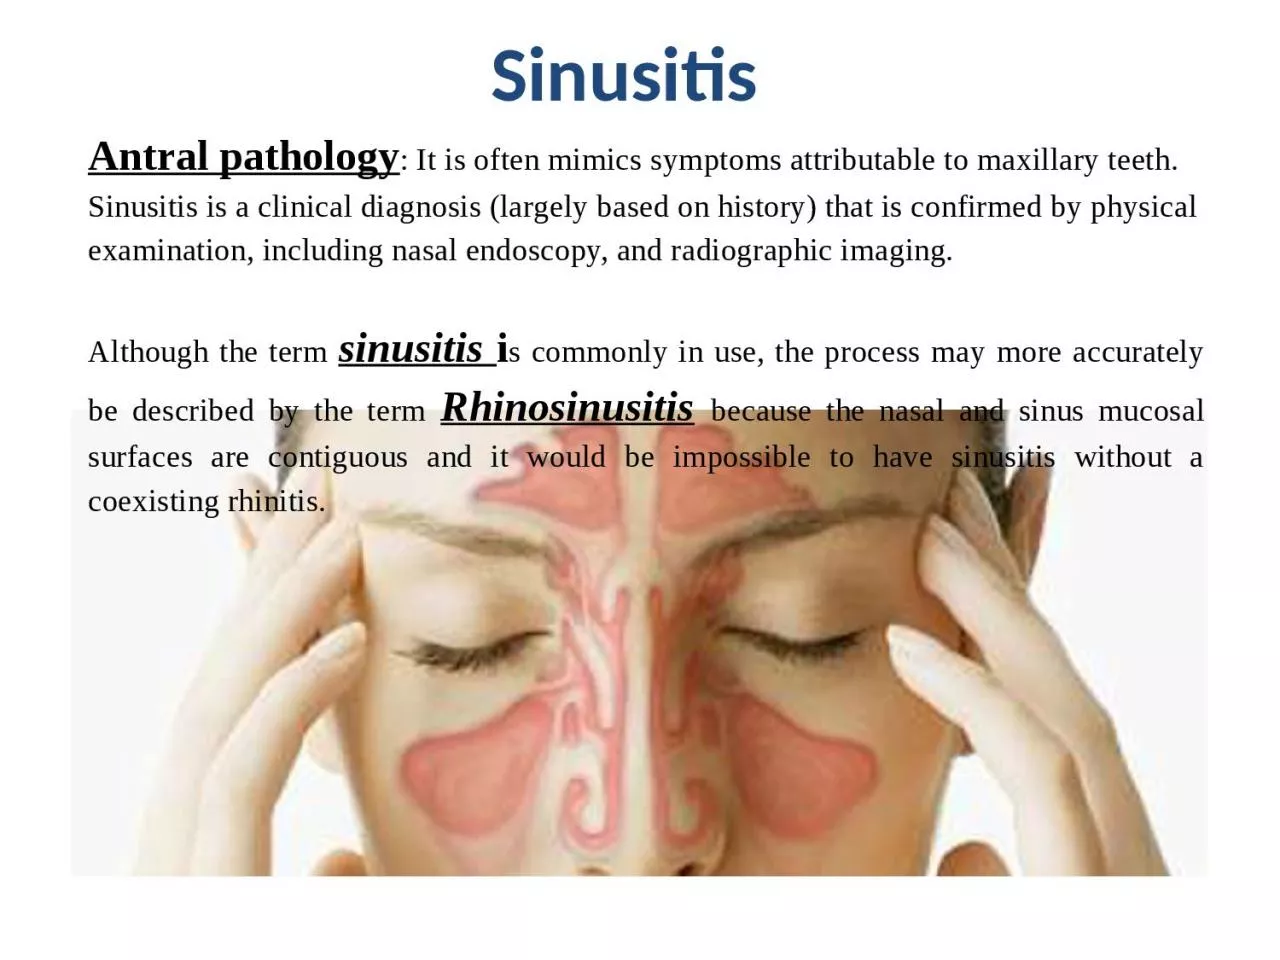 Sinusitis   	 - bed rest, nasal decongestants, analgesics, antibiotics